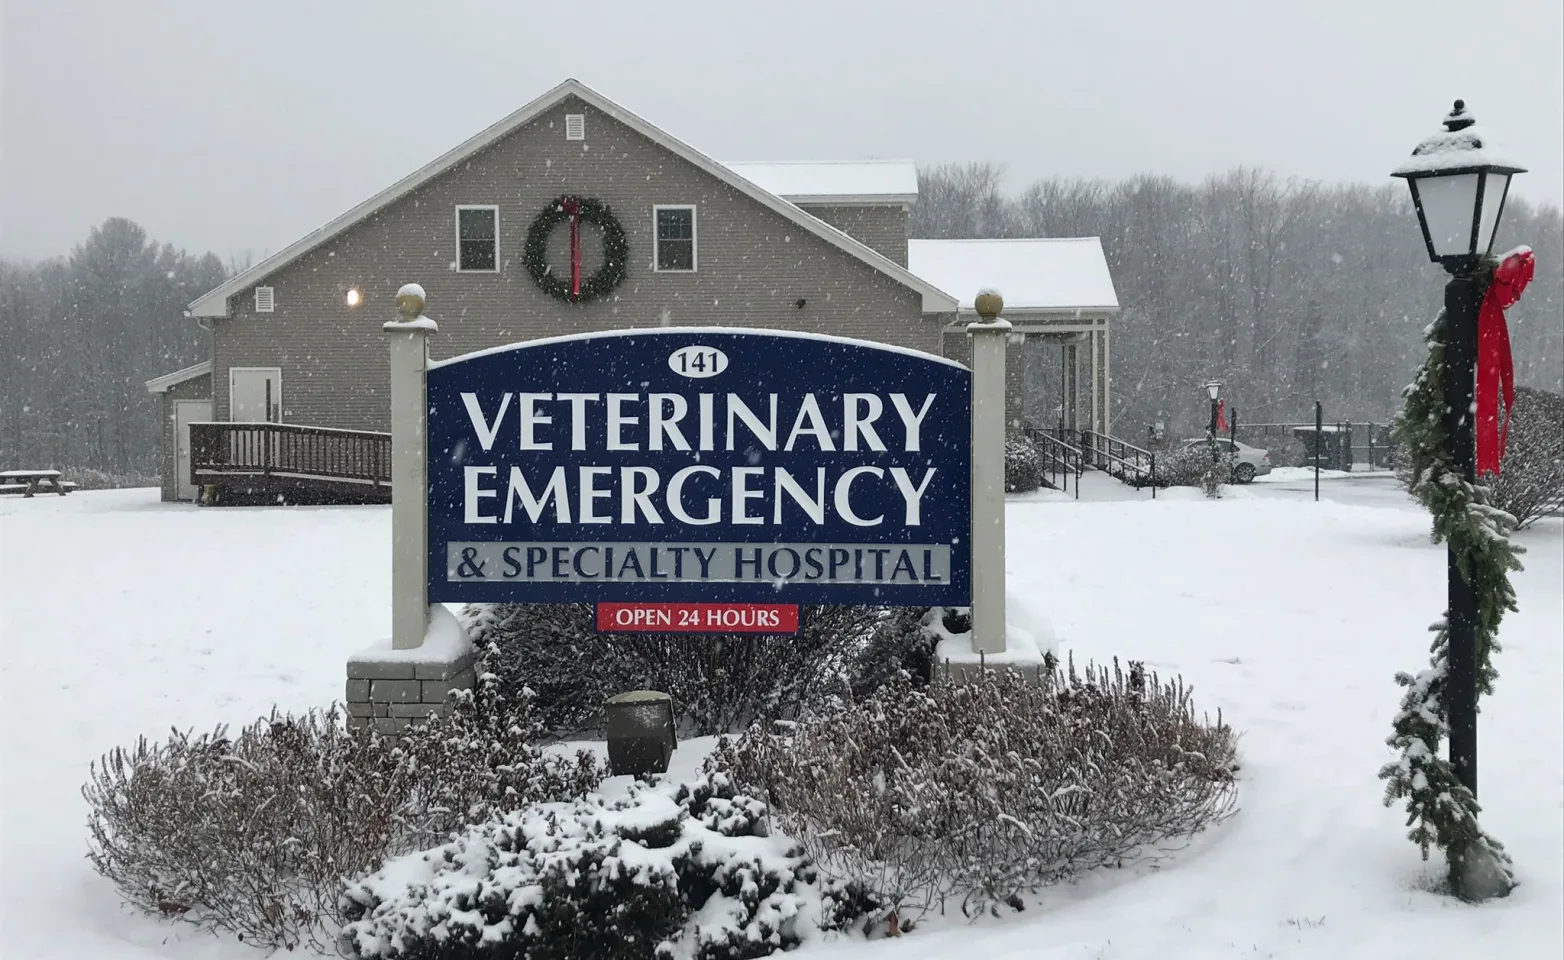 Veterinary Emergency & Specialty Hospital of South Deerfield, Massachusetts in winter